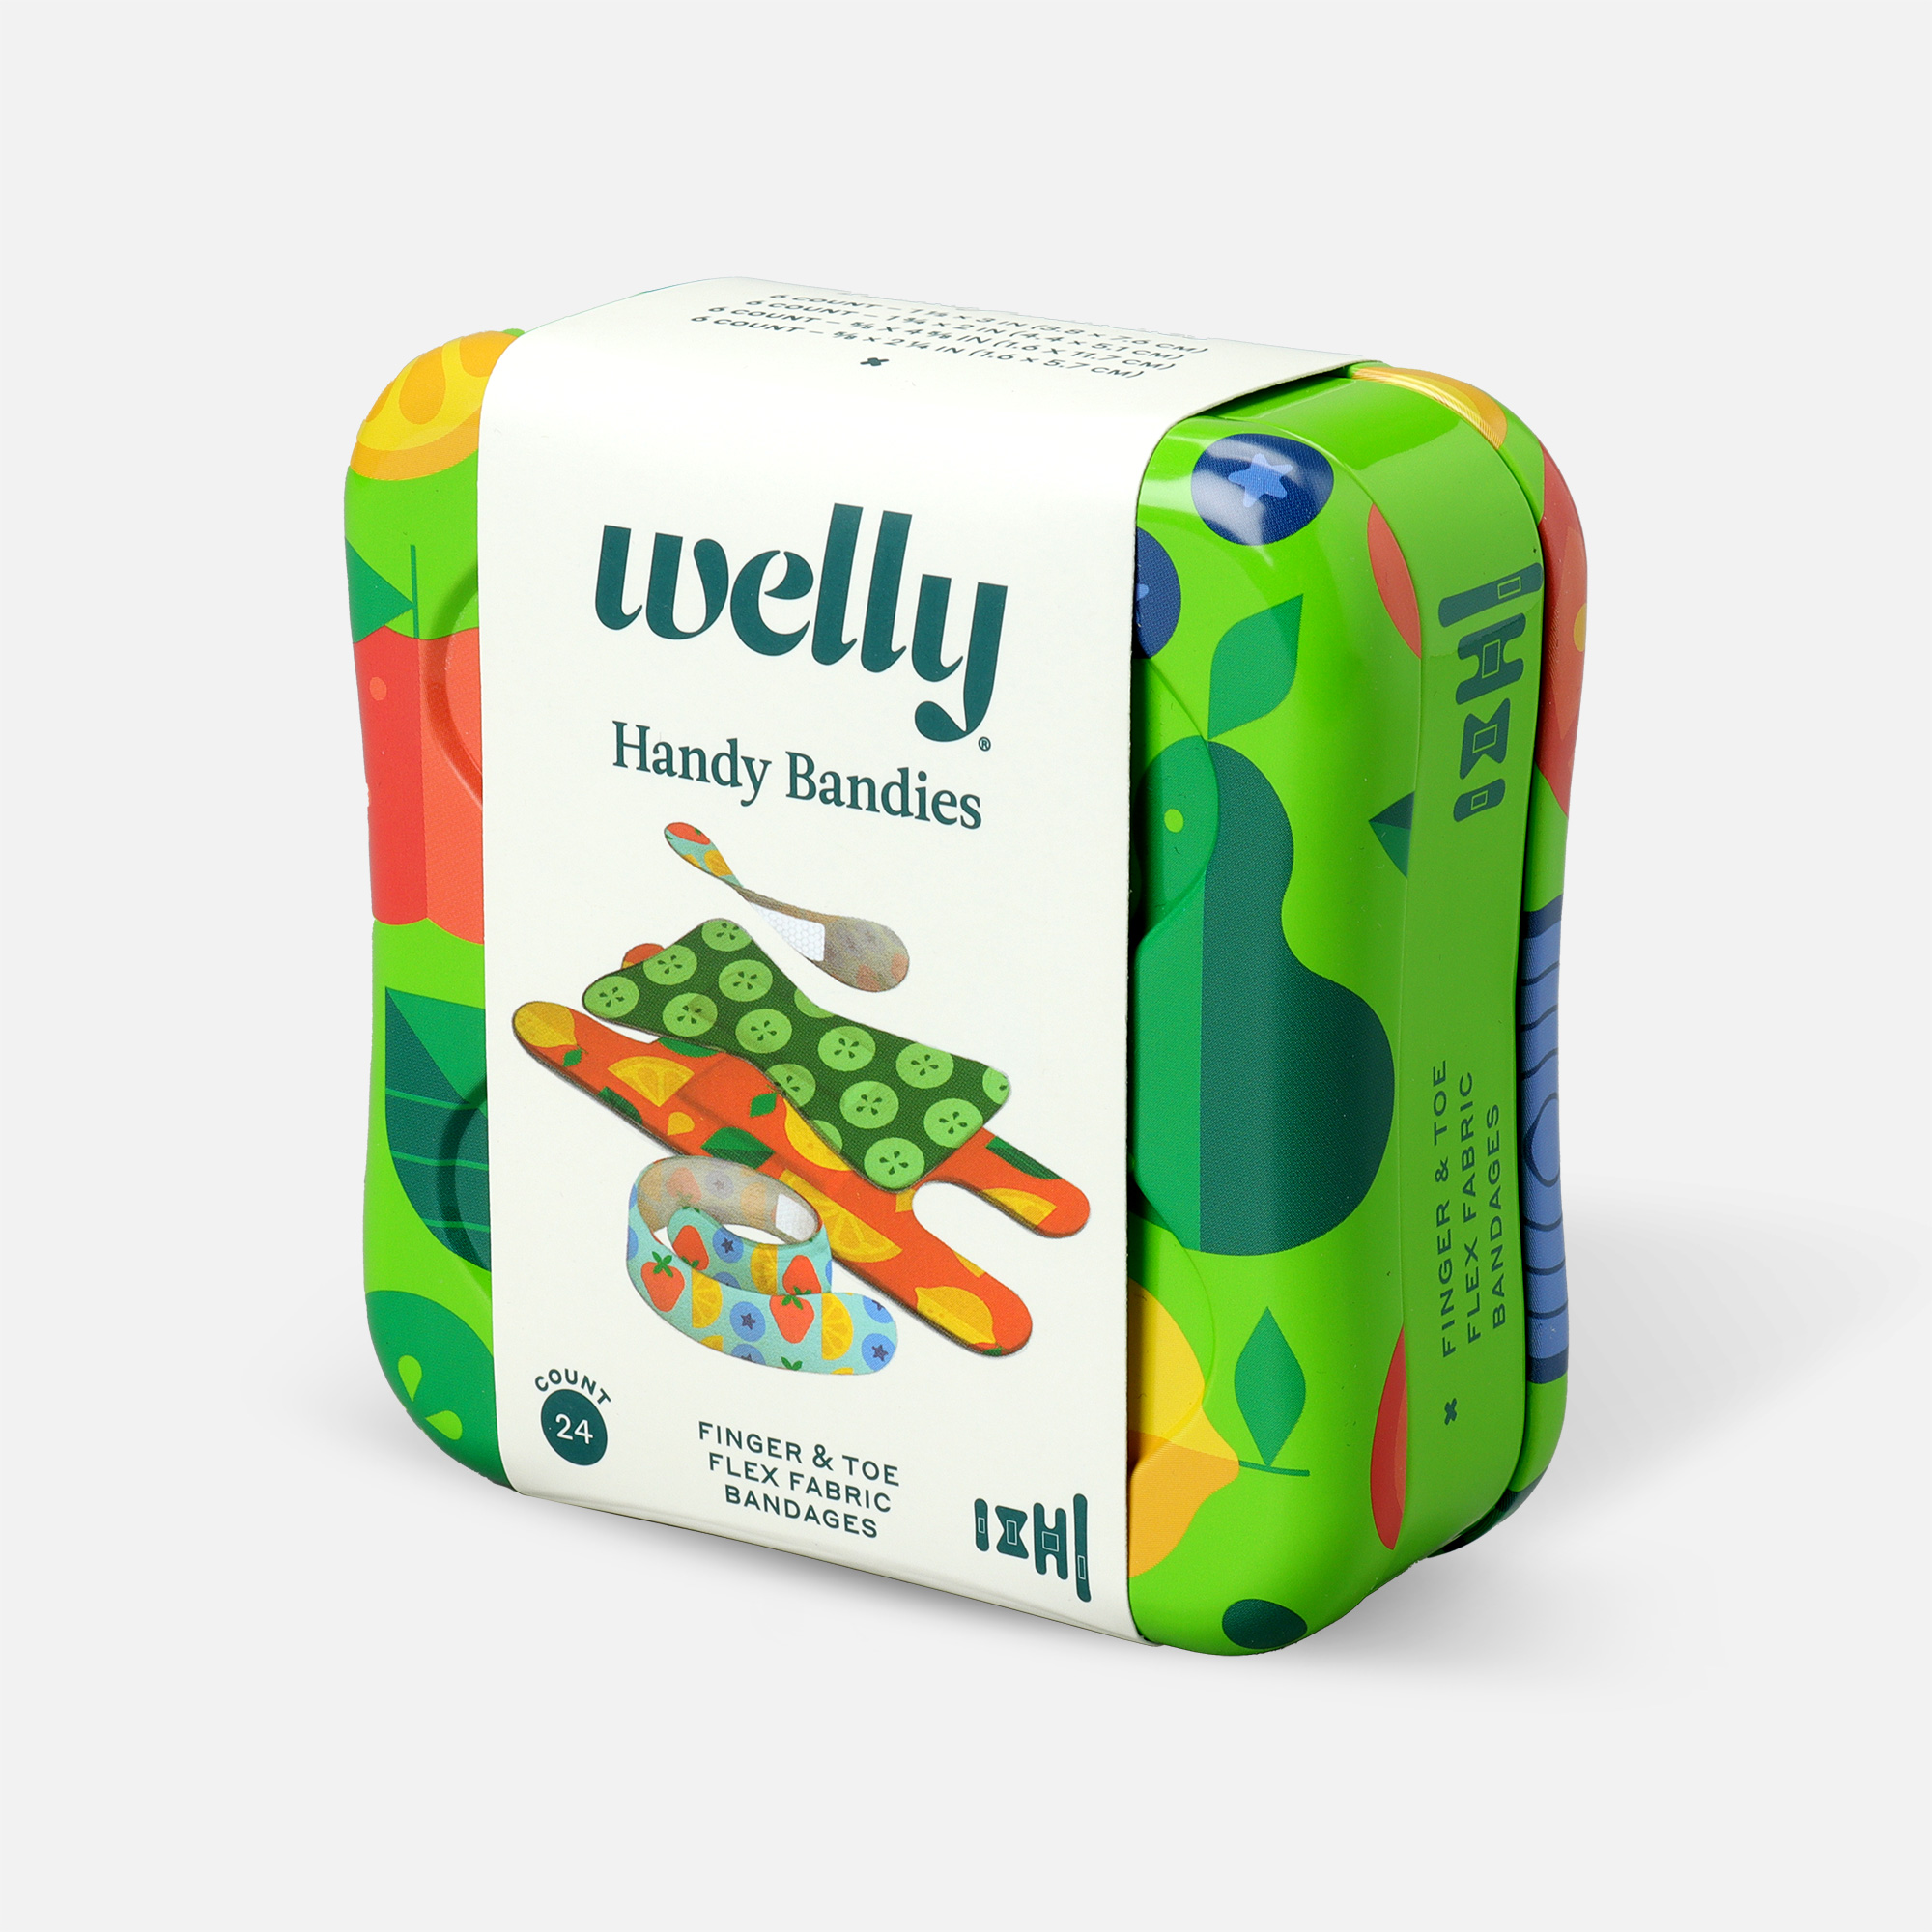 Welly Handy Bandies Veggie Assorted Toe & Finger Flex Fabric Bandages - 24  ct.